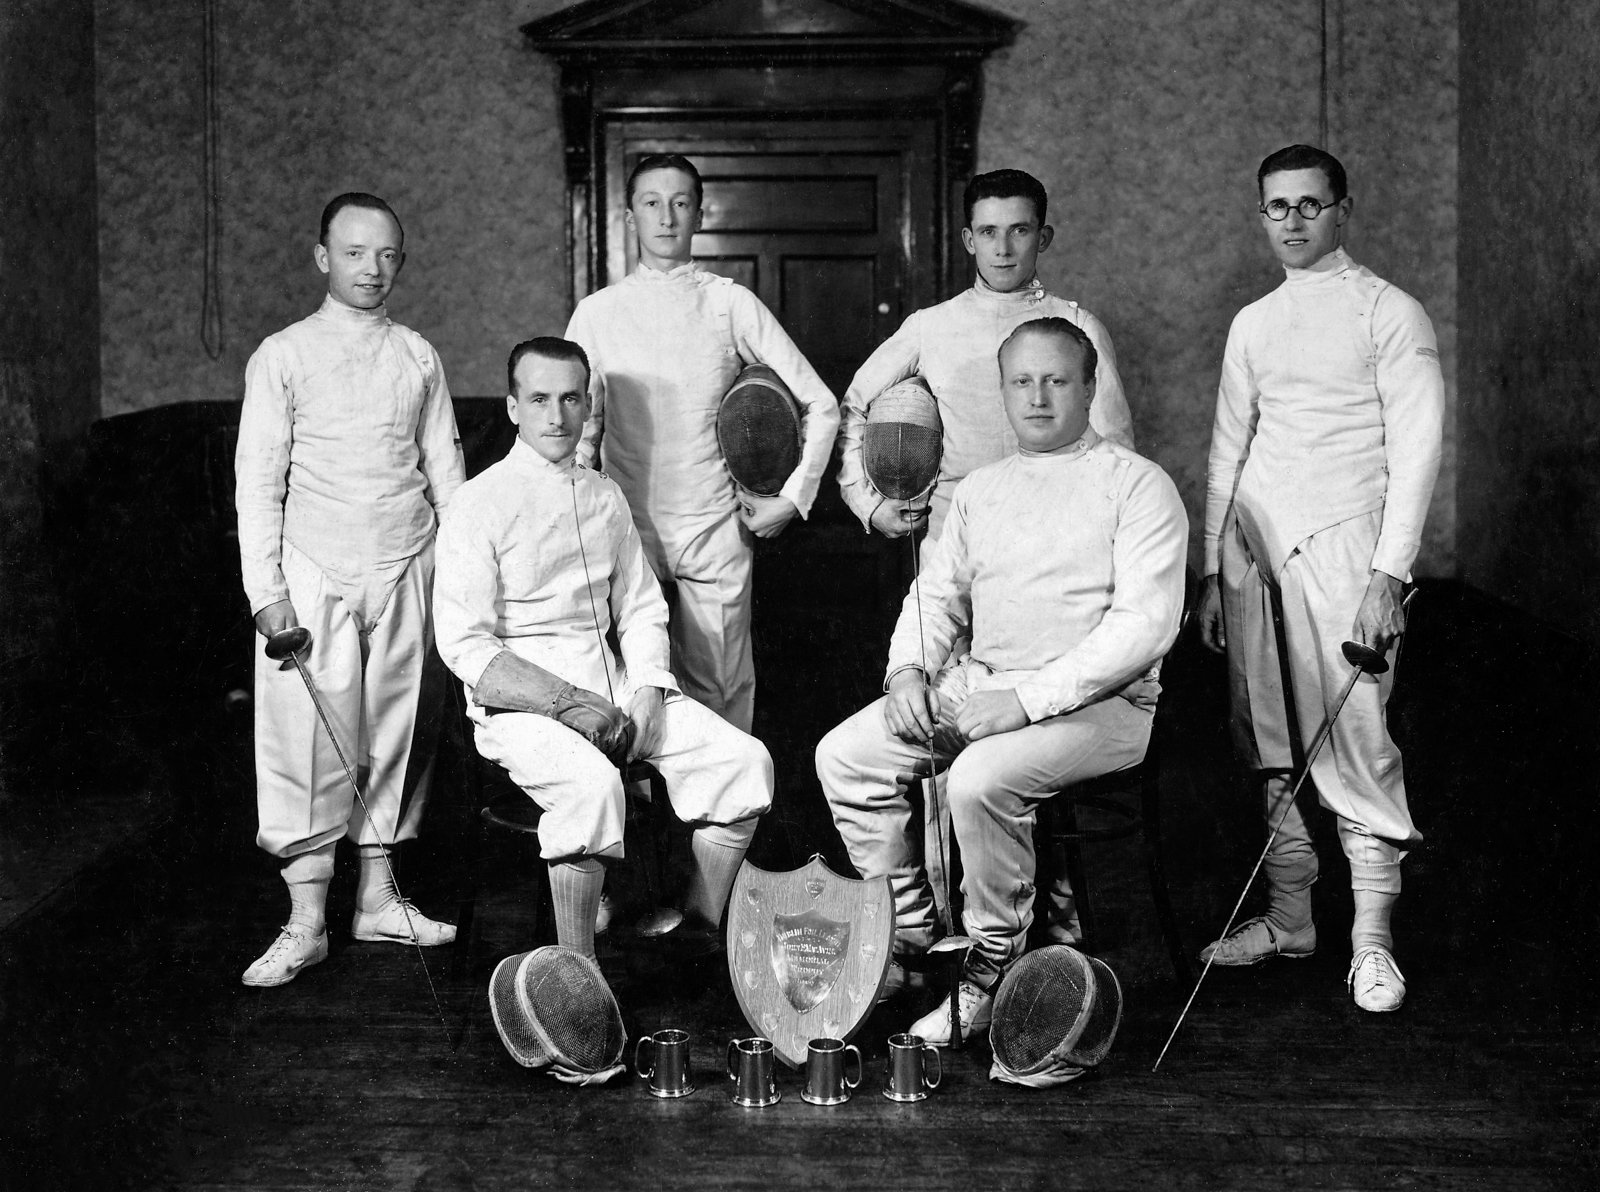 Team from the Achilles Fencing Club, Dawson Street Dublin, 1942.